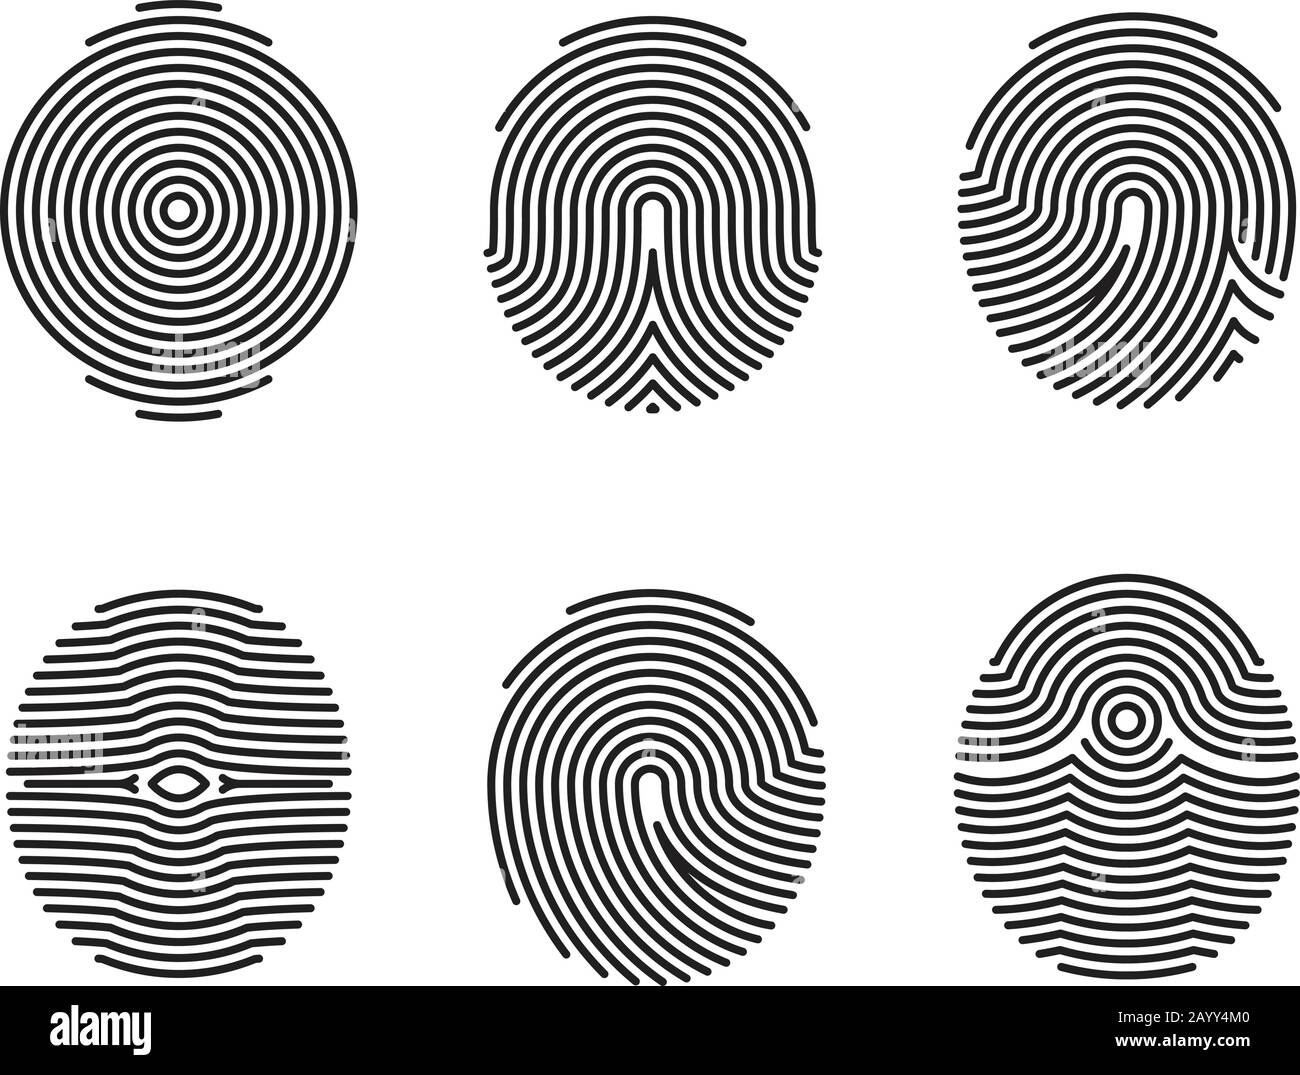 Fingerprint-Vektor-Symbole festgelegt. Muster Fingerabdruck für Sicherheit, Illustrationssatz des Fingerabdrucks für den Identitätsmann Stock Vektor